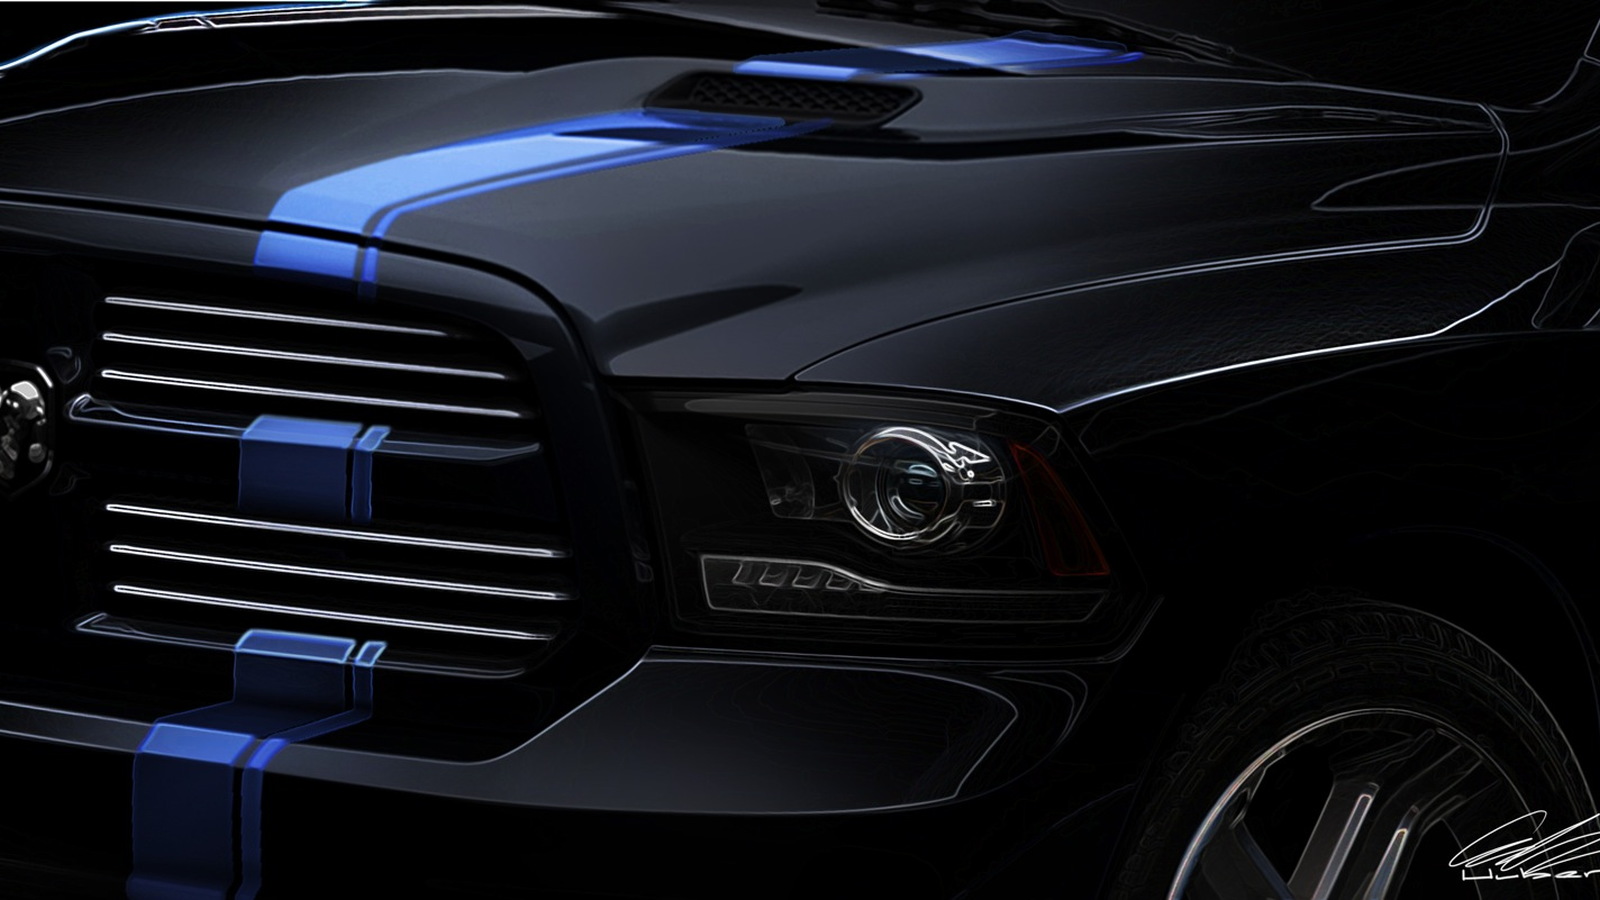 Mopar-enhanced Chrysler vehicles to be shown at the 2012 SEMA show.